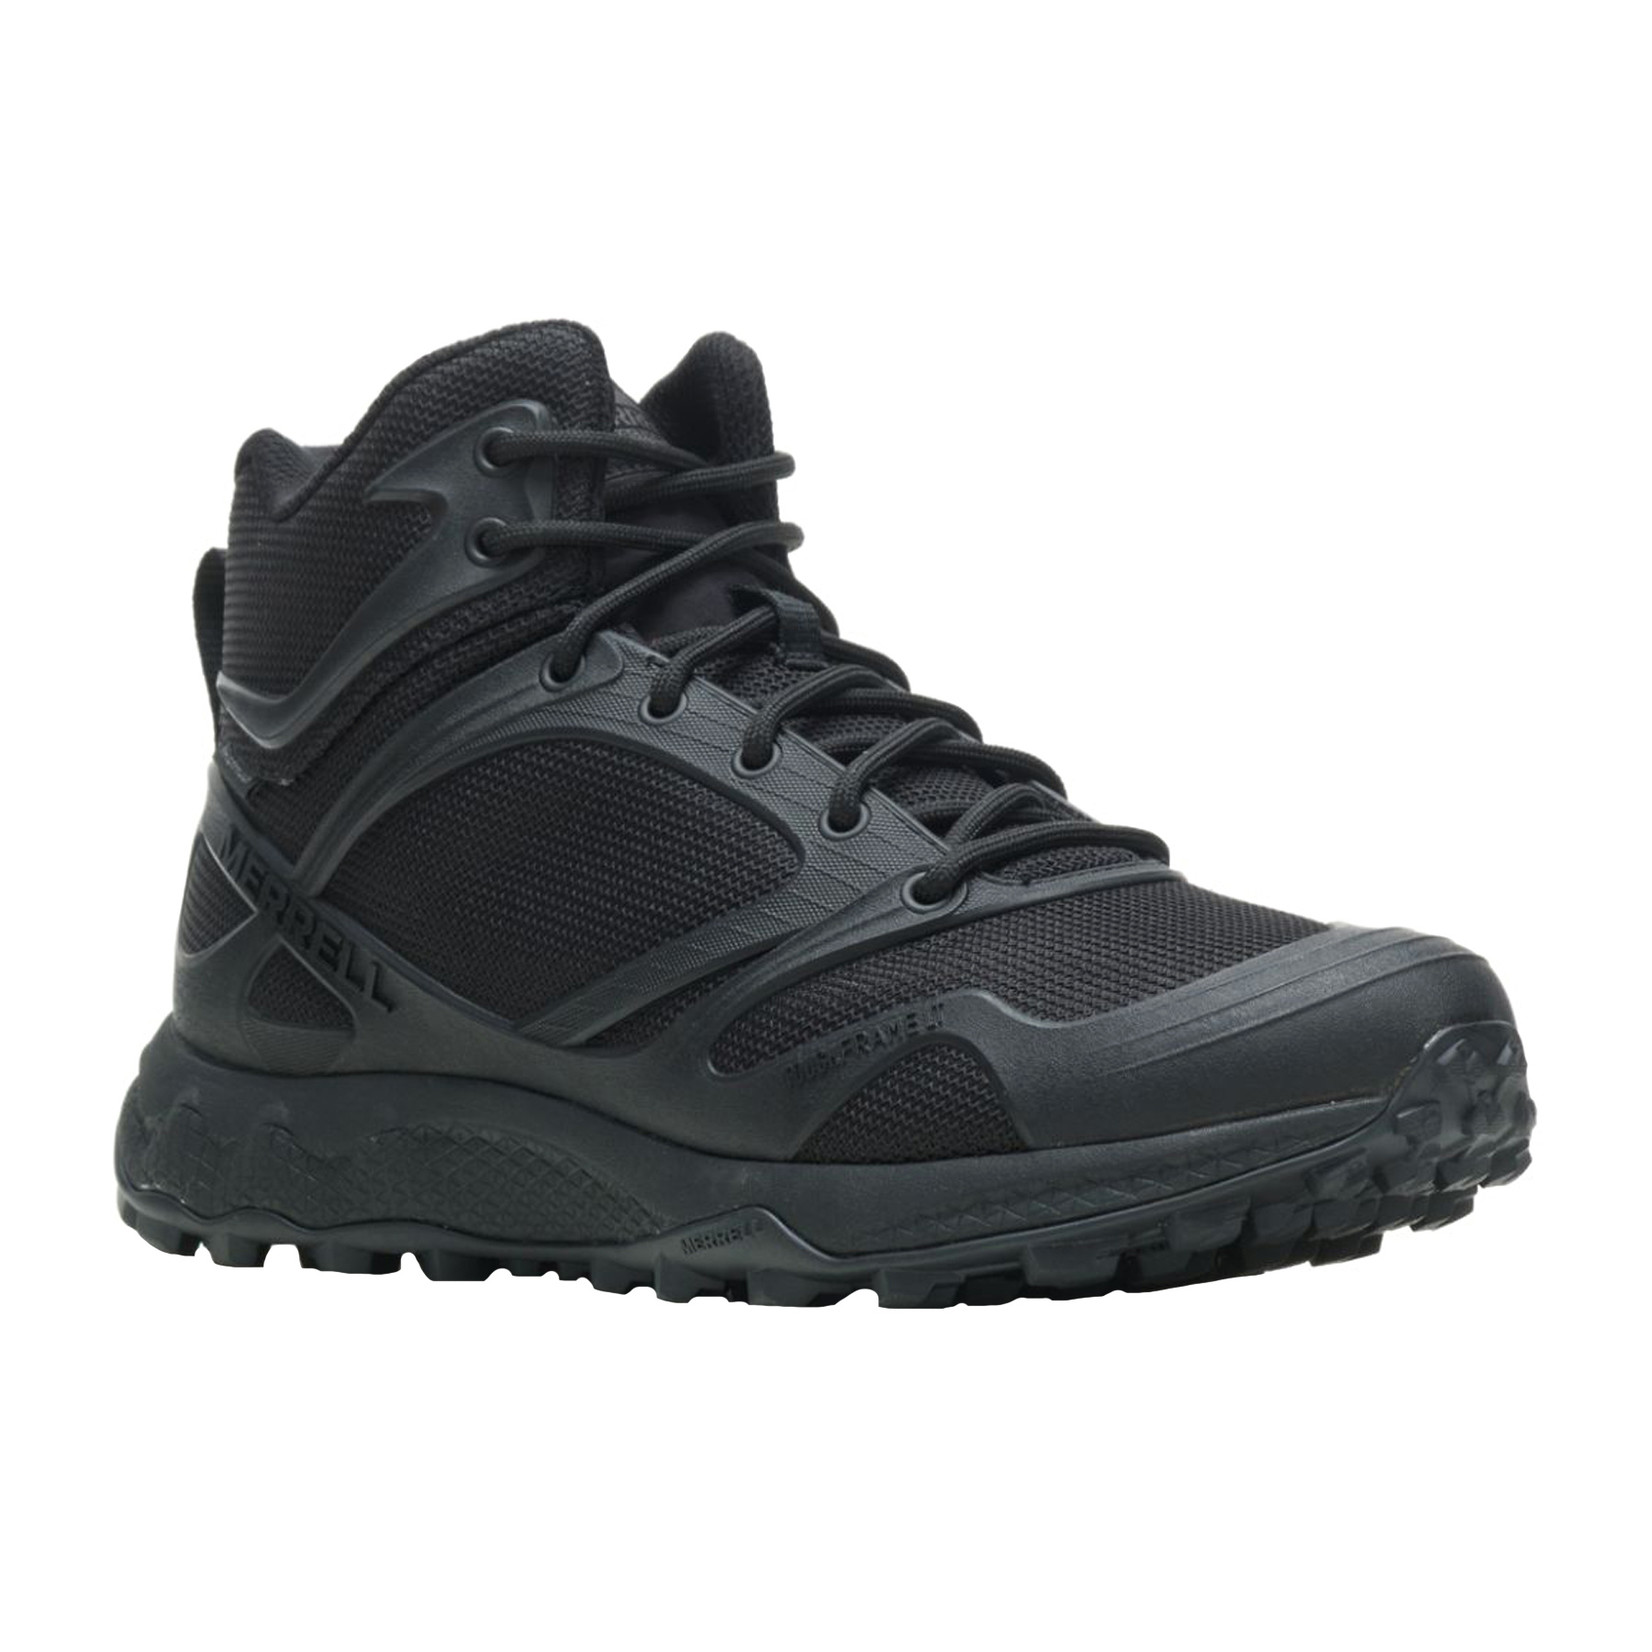 Merrell Breacher Mid Tactical WP Men's Work Boots - Shippy Shoes